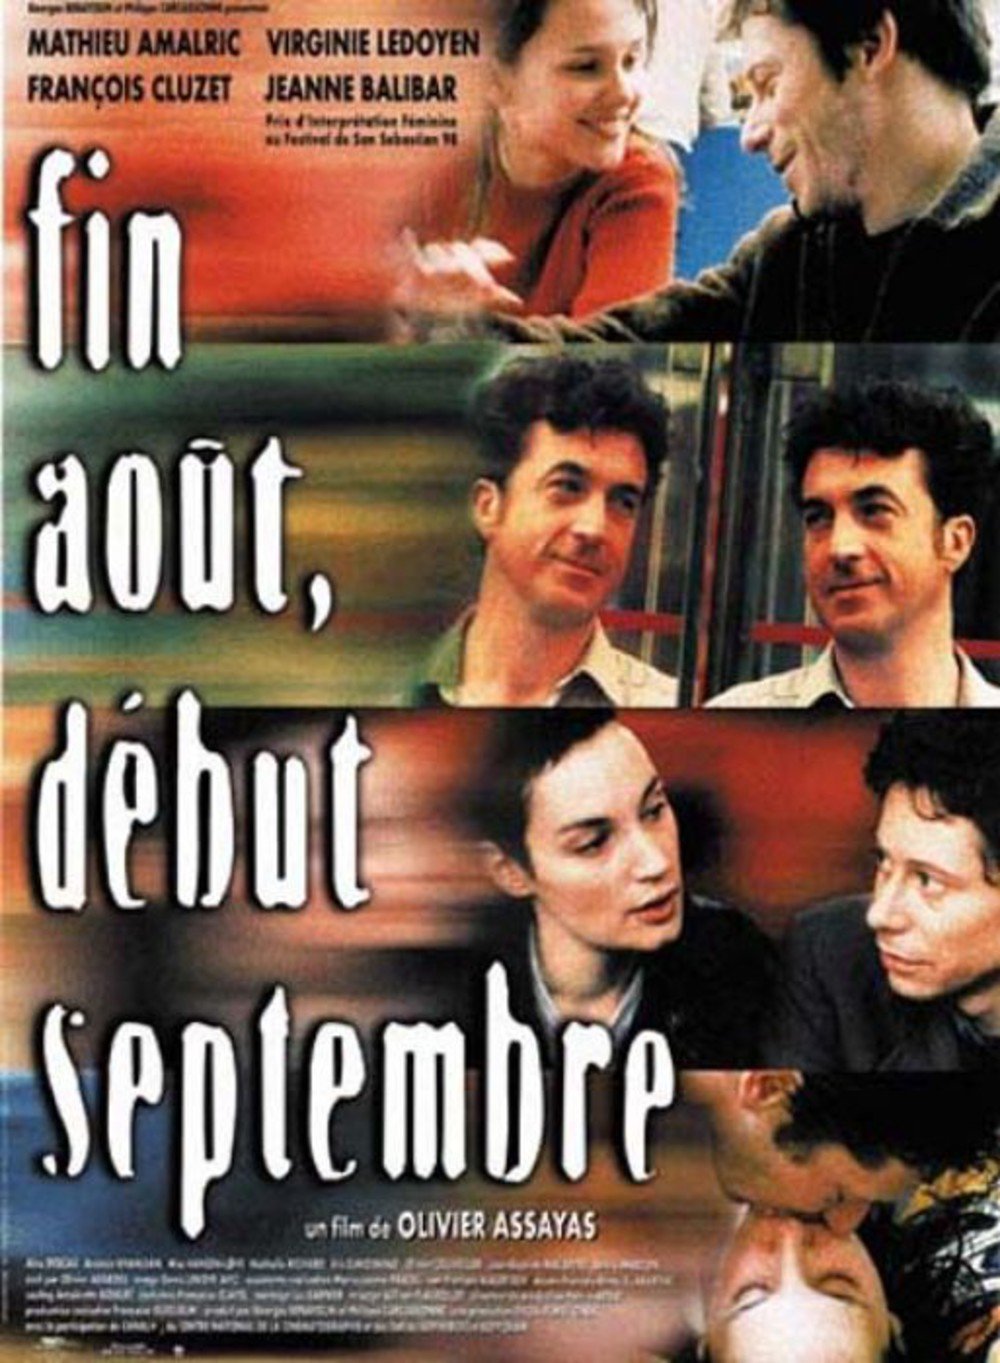 Poster of the movie Fin août, début septembre